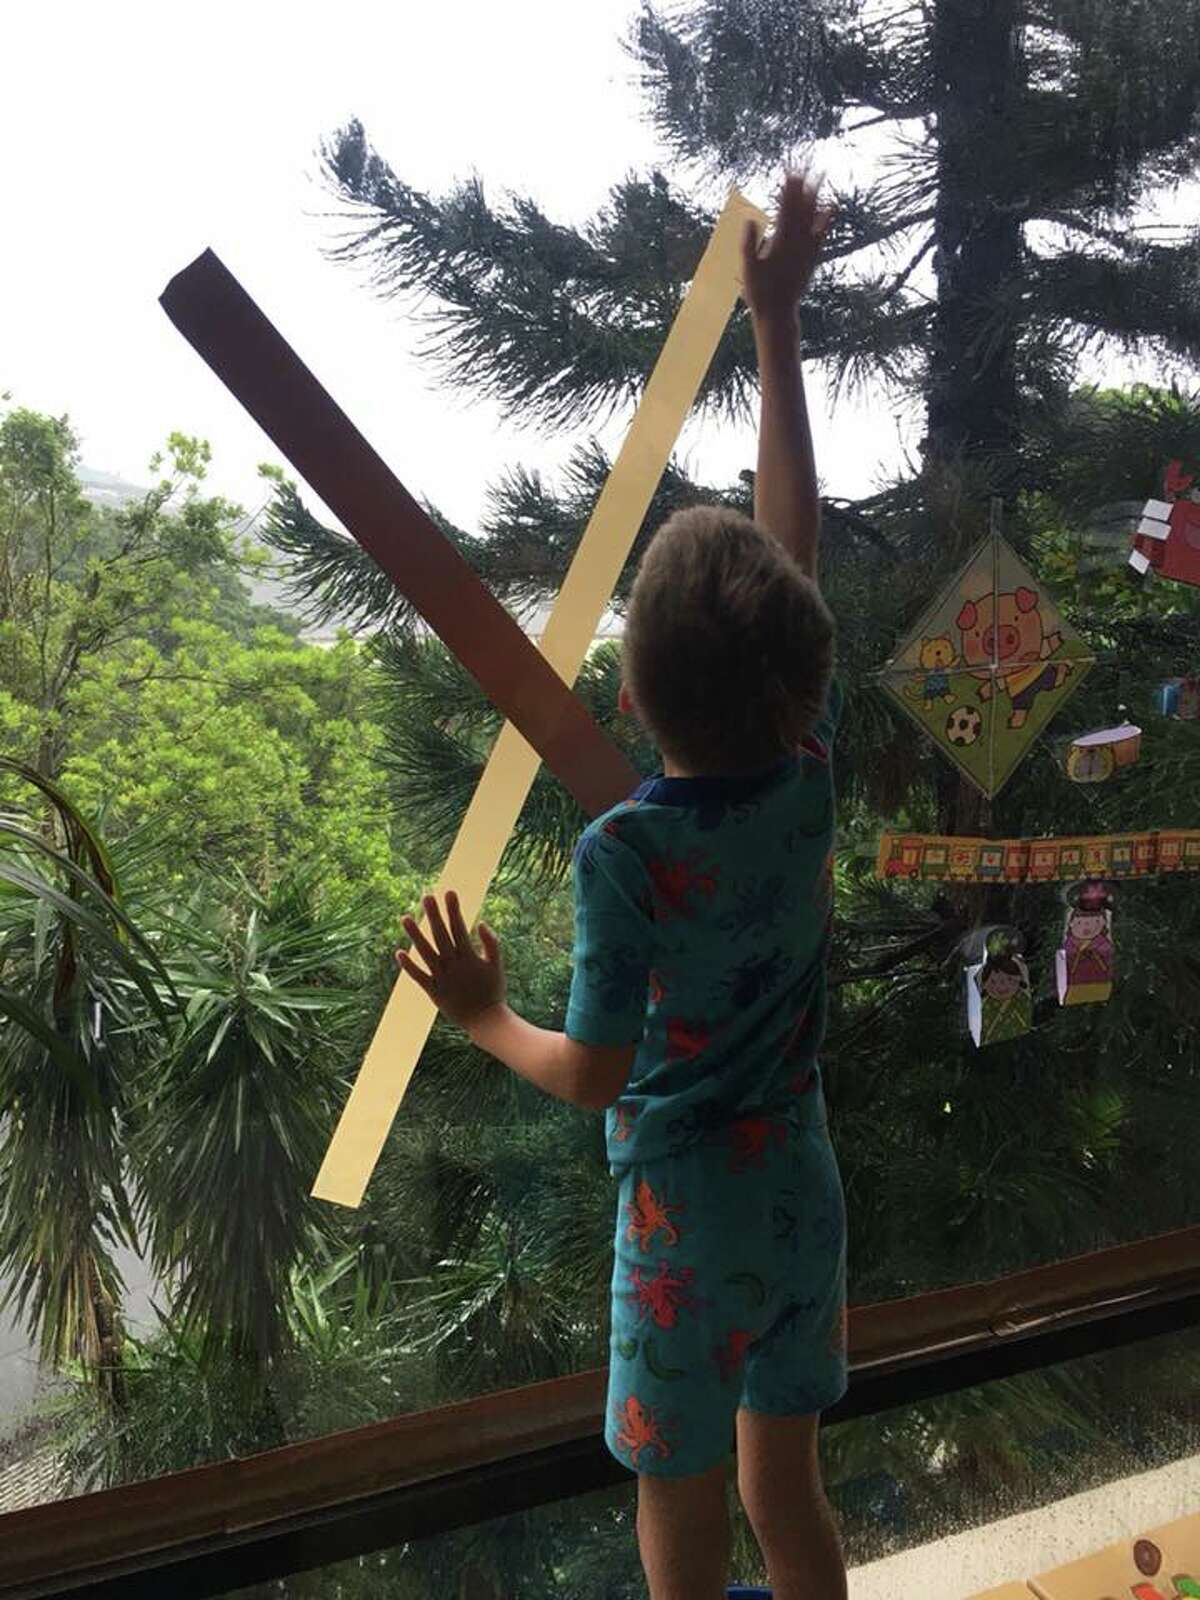 Knapp's grandson Cooper helping tape up windows before Typhoon Mangkhut arrives in Hong Kong.